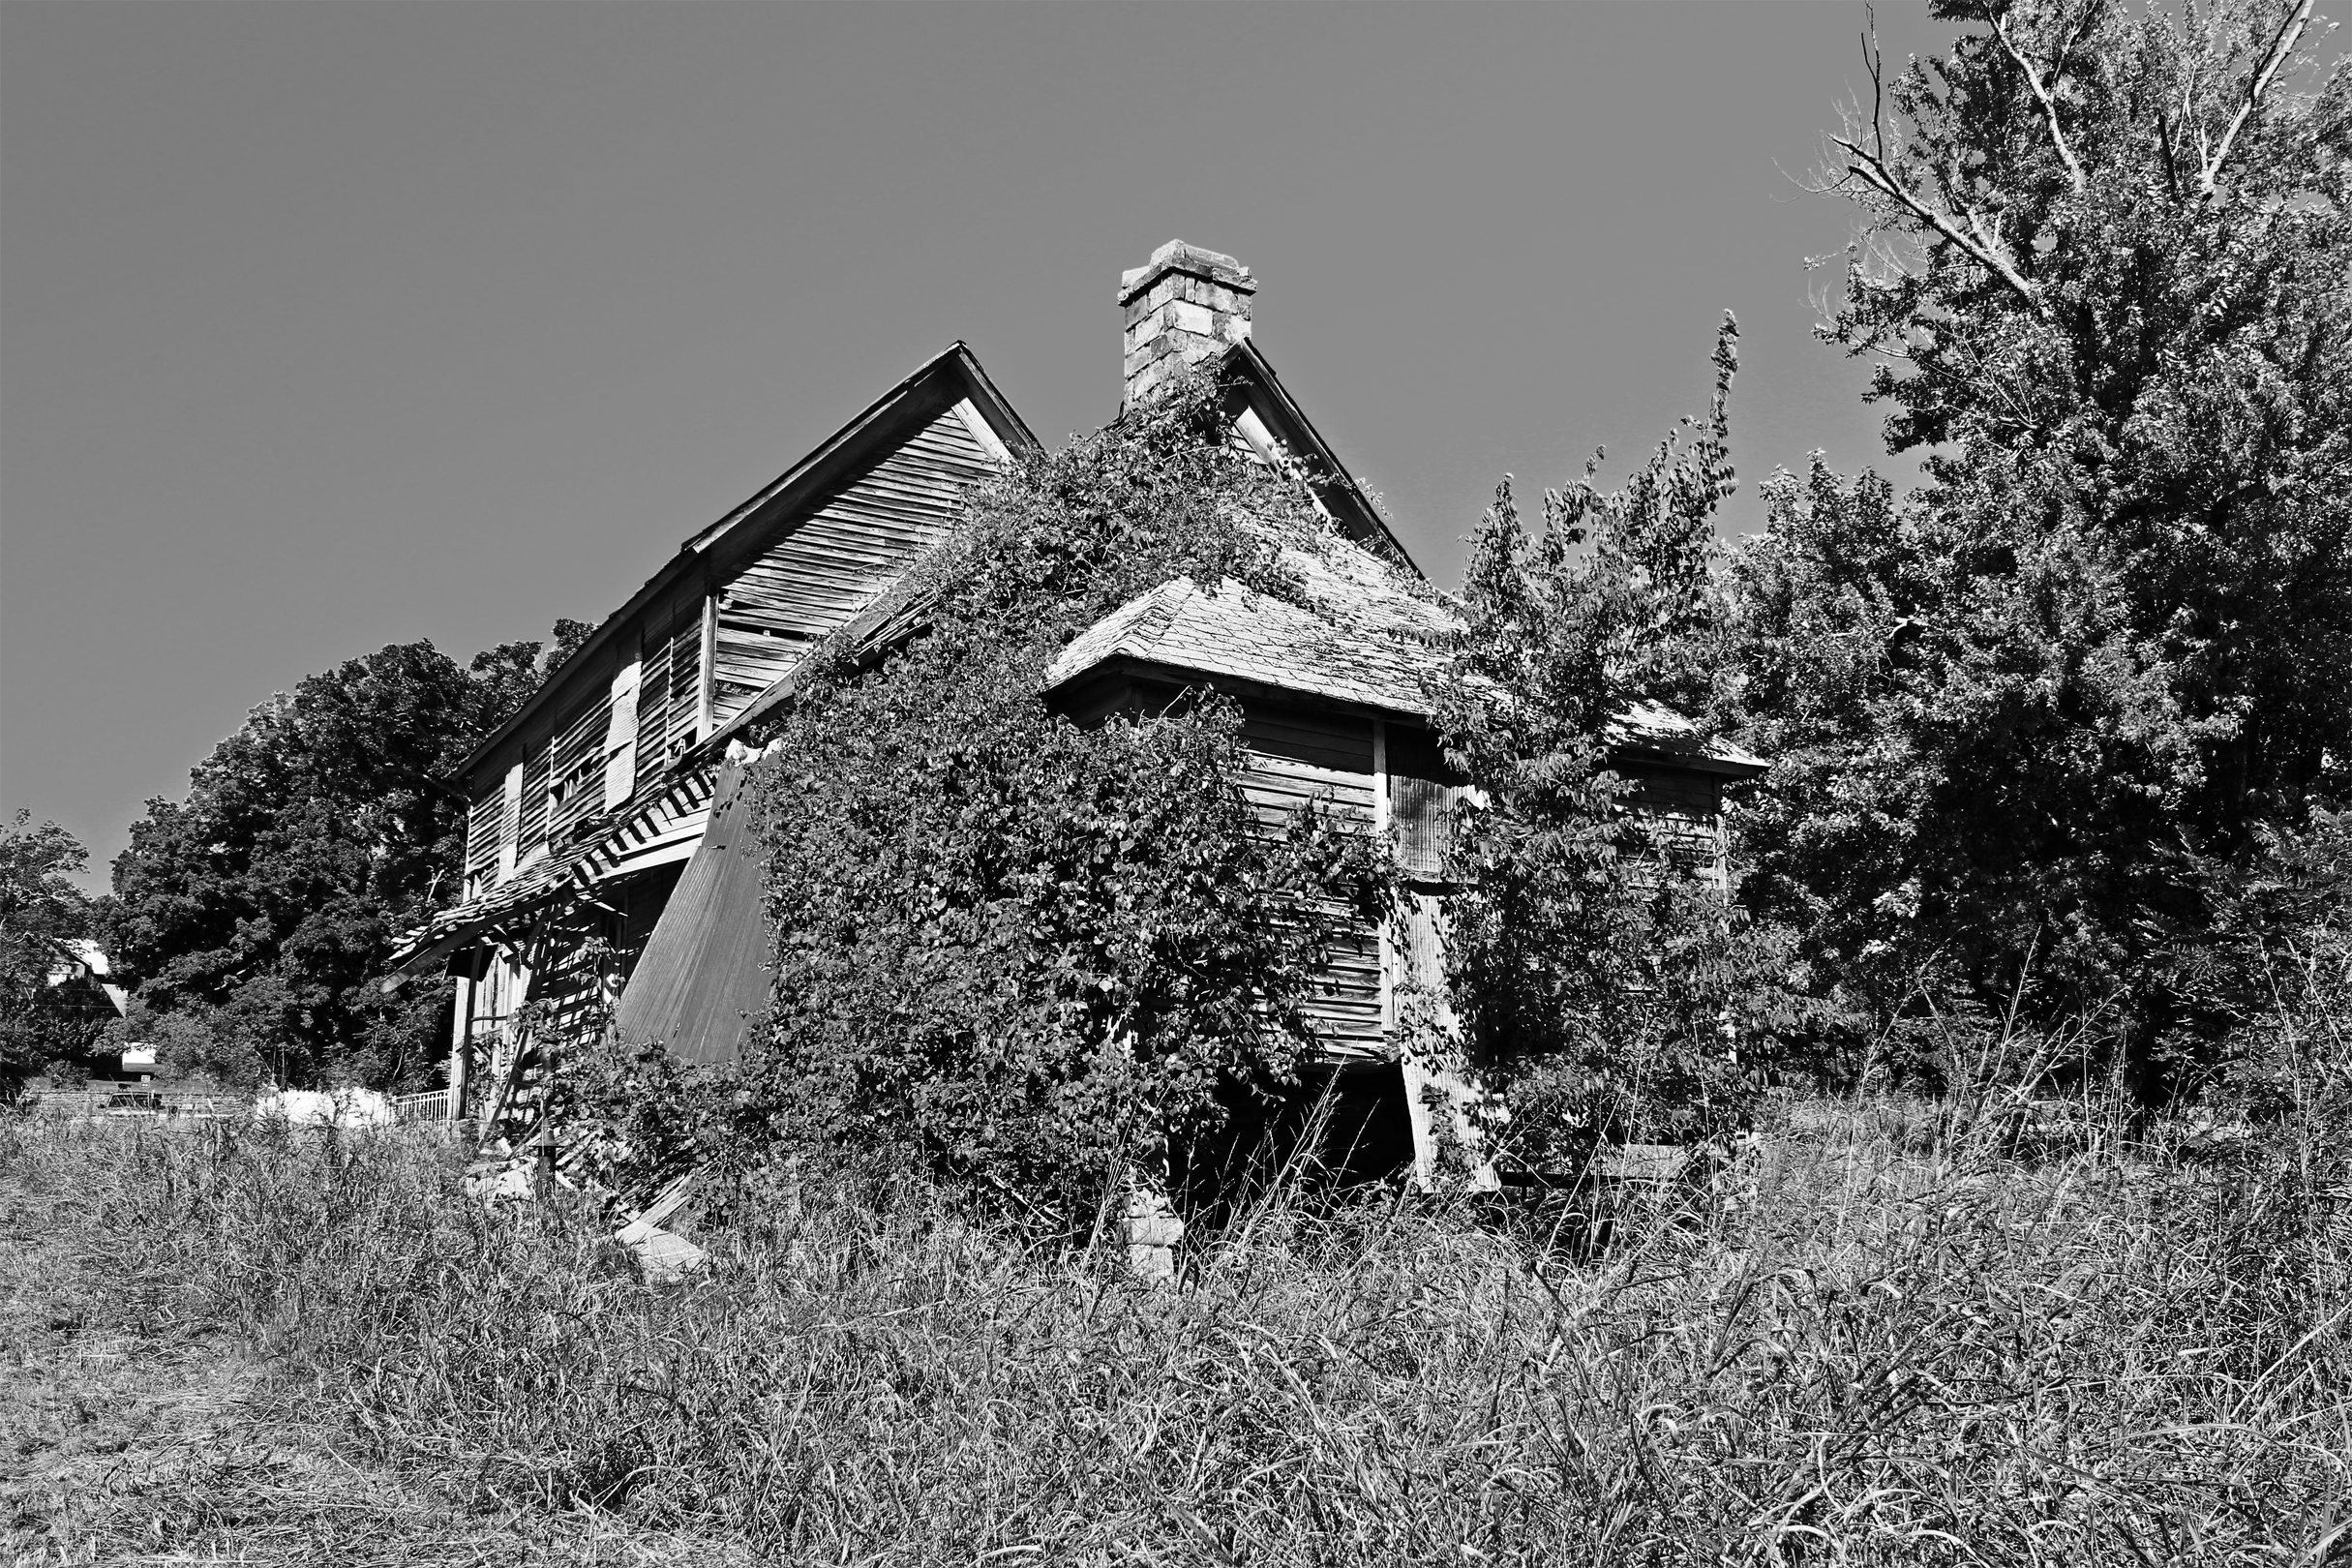    Dilapidated Farm House  , Cane Hill, AR, 2013. B&amp;W HDR digital image. 